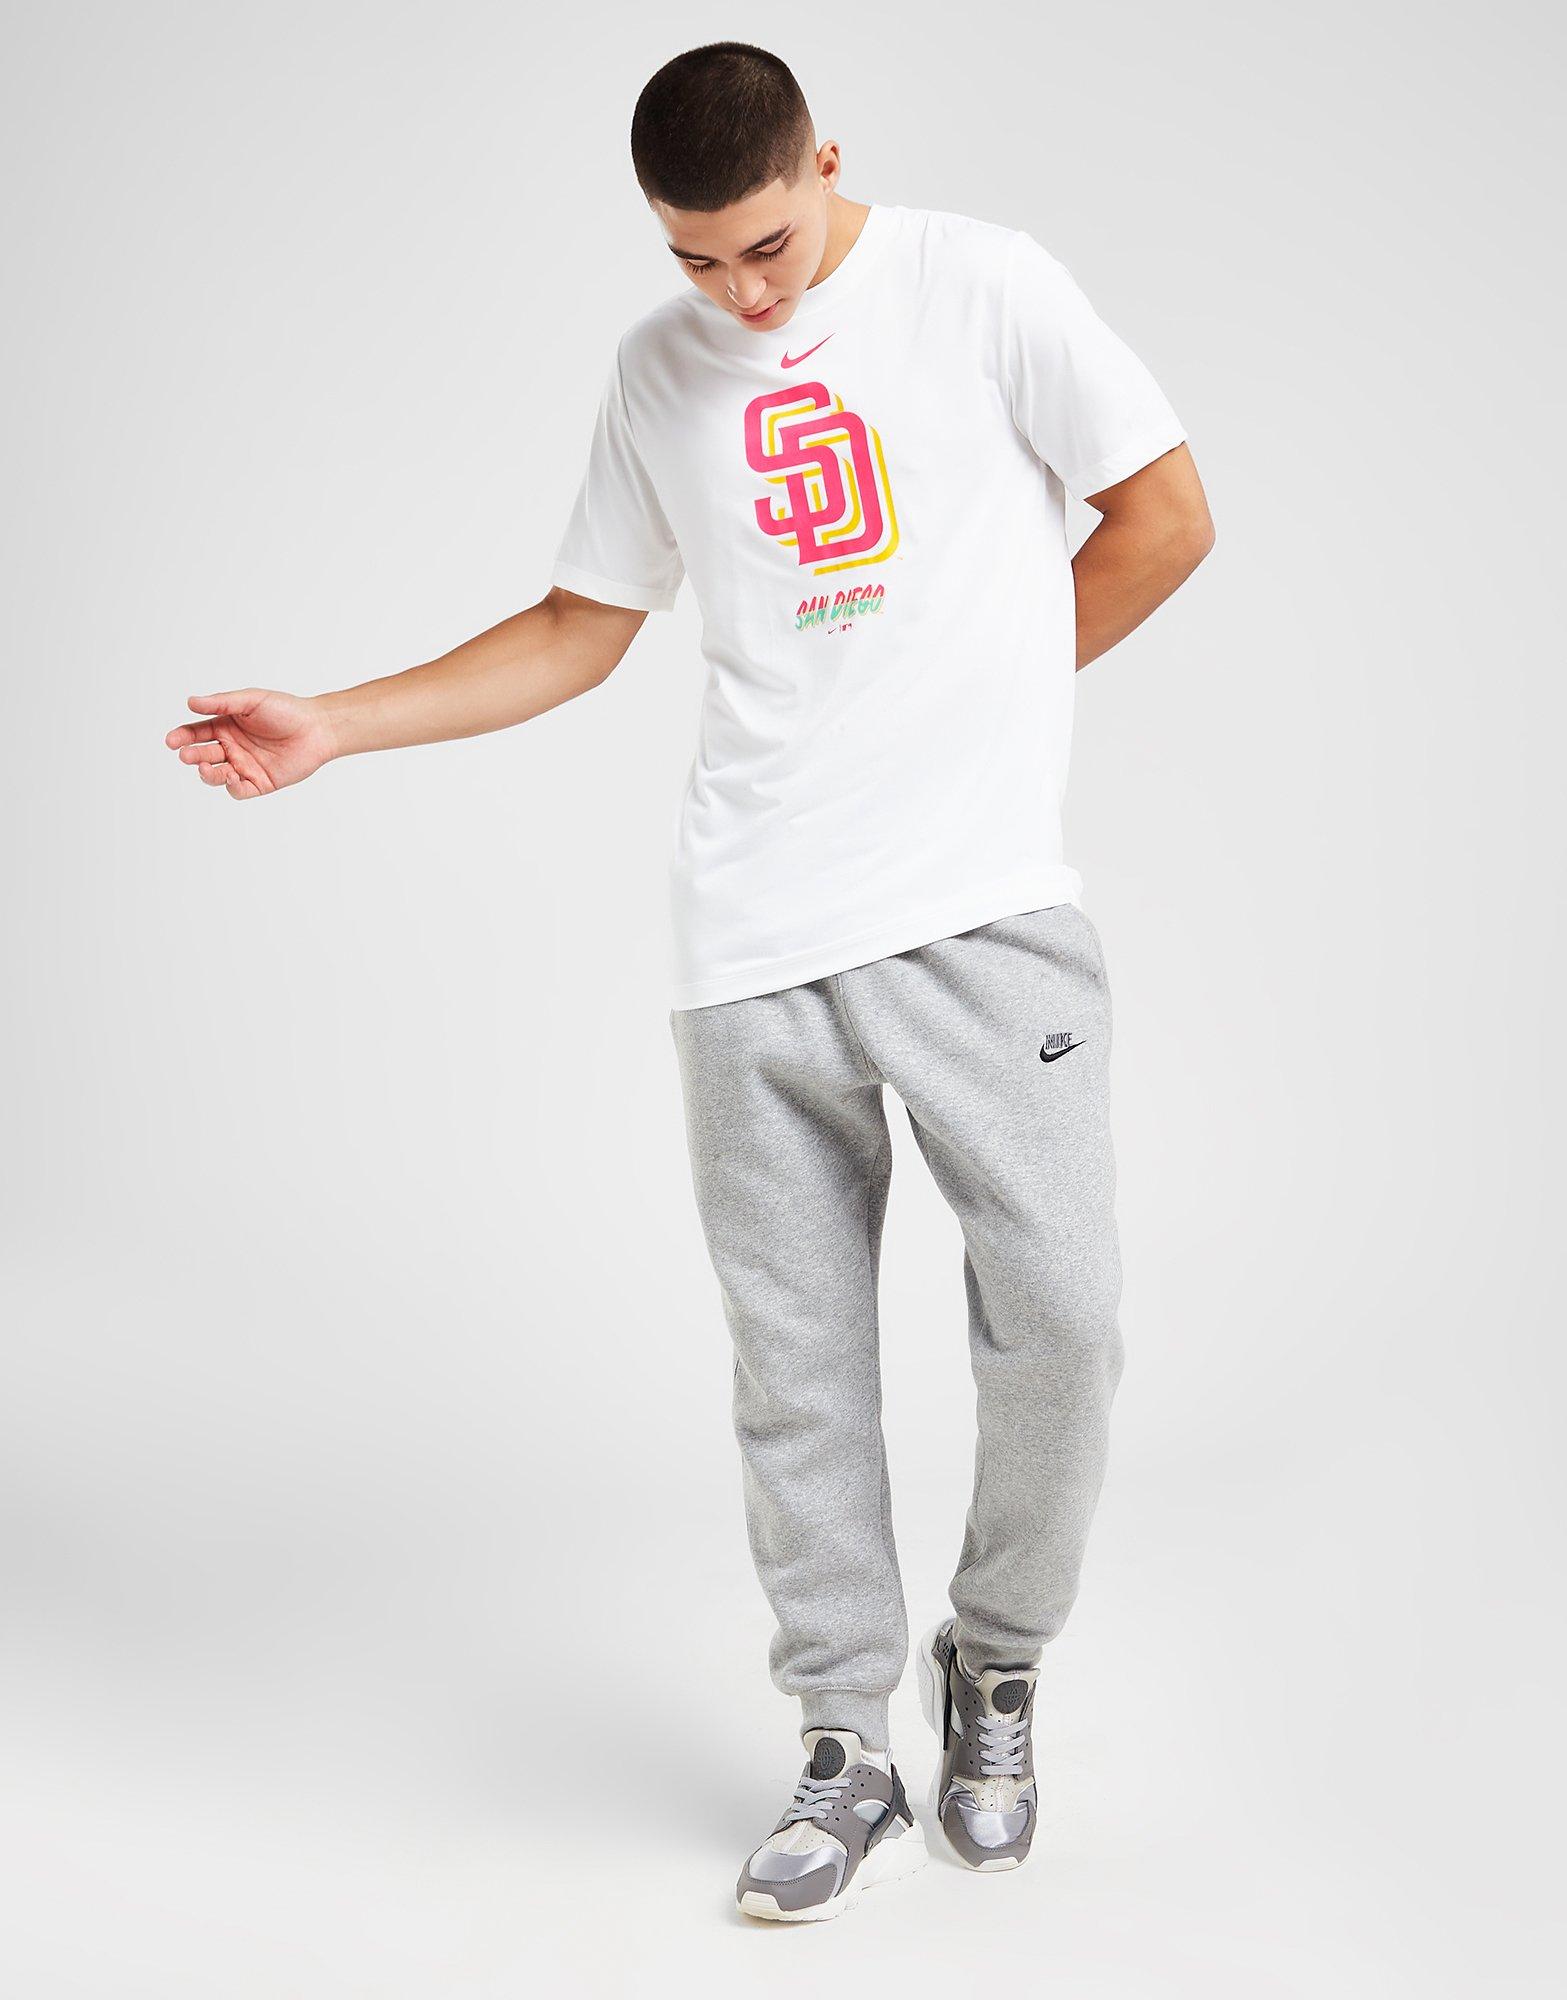 Nike / Men's San Diego Padres White Property Logo T-Shirt